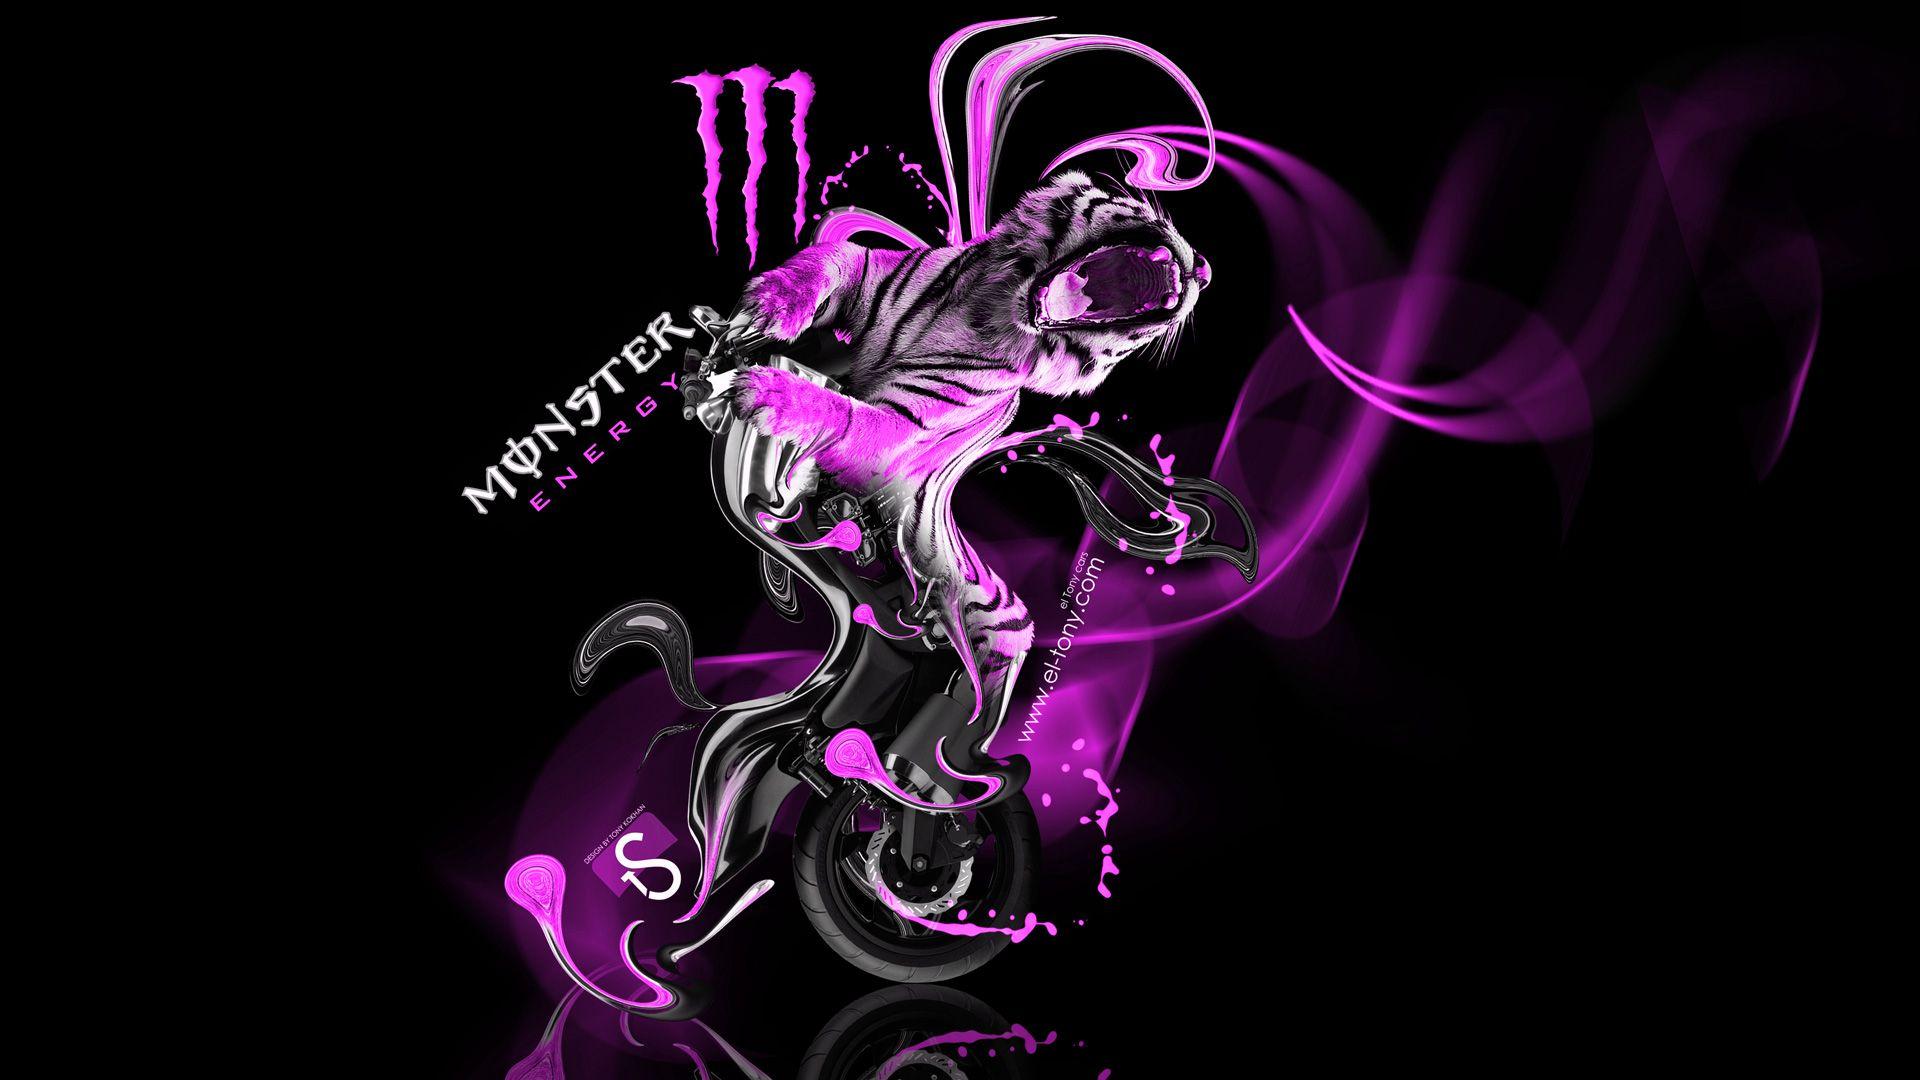 Pink Monster Energy Logo - 1920x1080px Fox and Monster Logo Wallpaper - WallpaperSafari